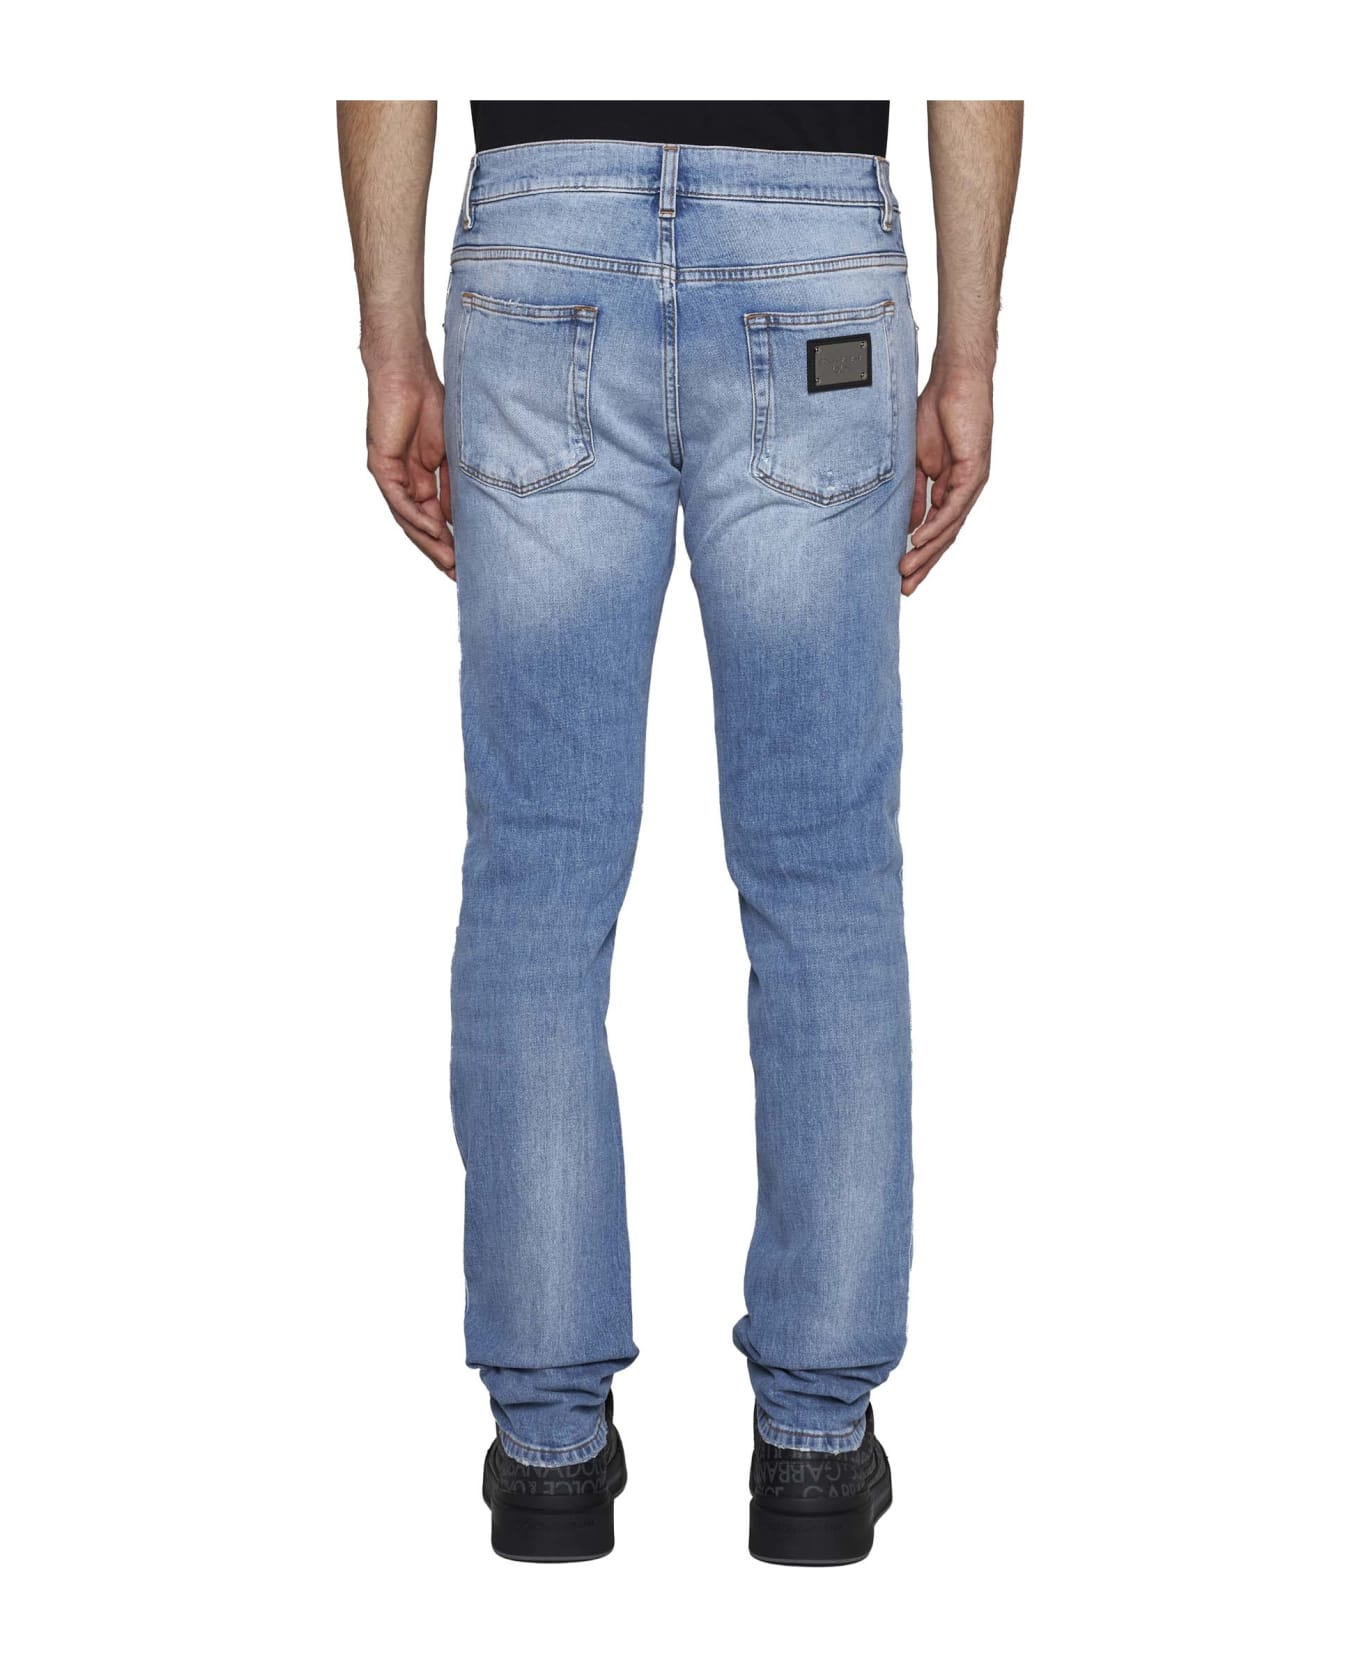 Dolce & Gabbana Skinny Denim Jeans - Variante abbinata